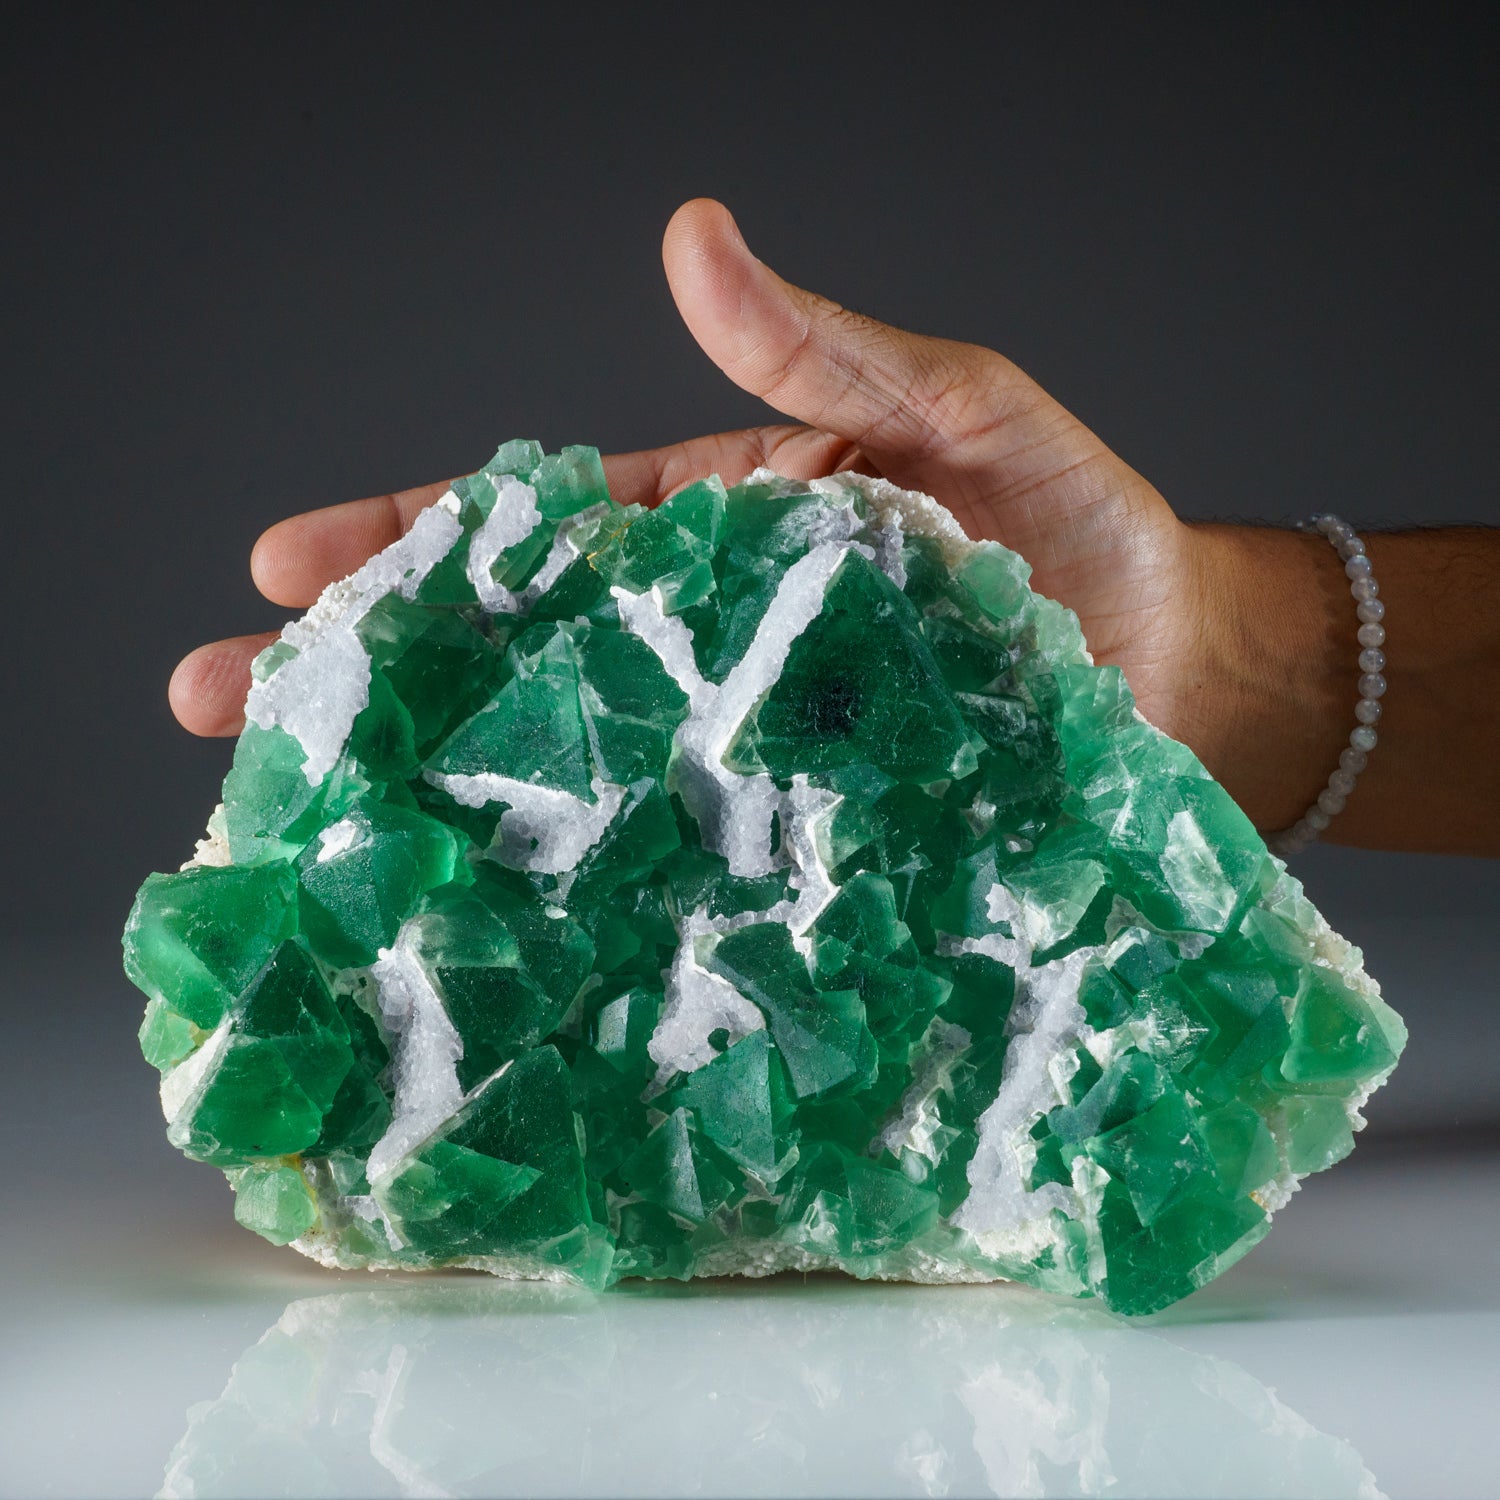 Green Fluorite and Calcite from Shanhua Pu Mine, Xianghualing, Hunan Province, China